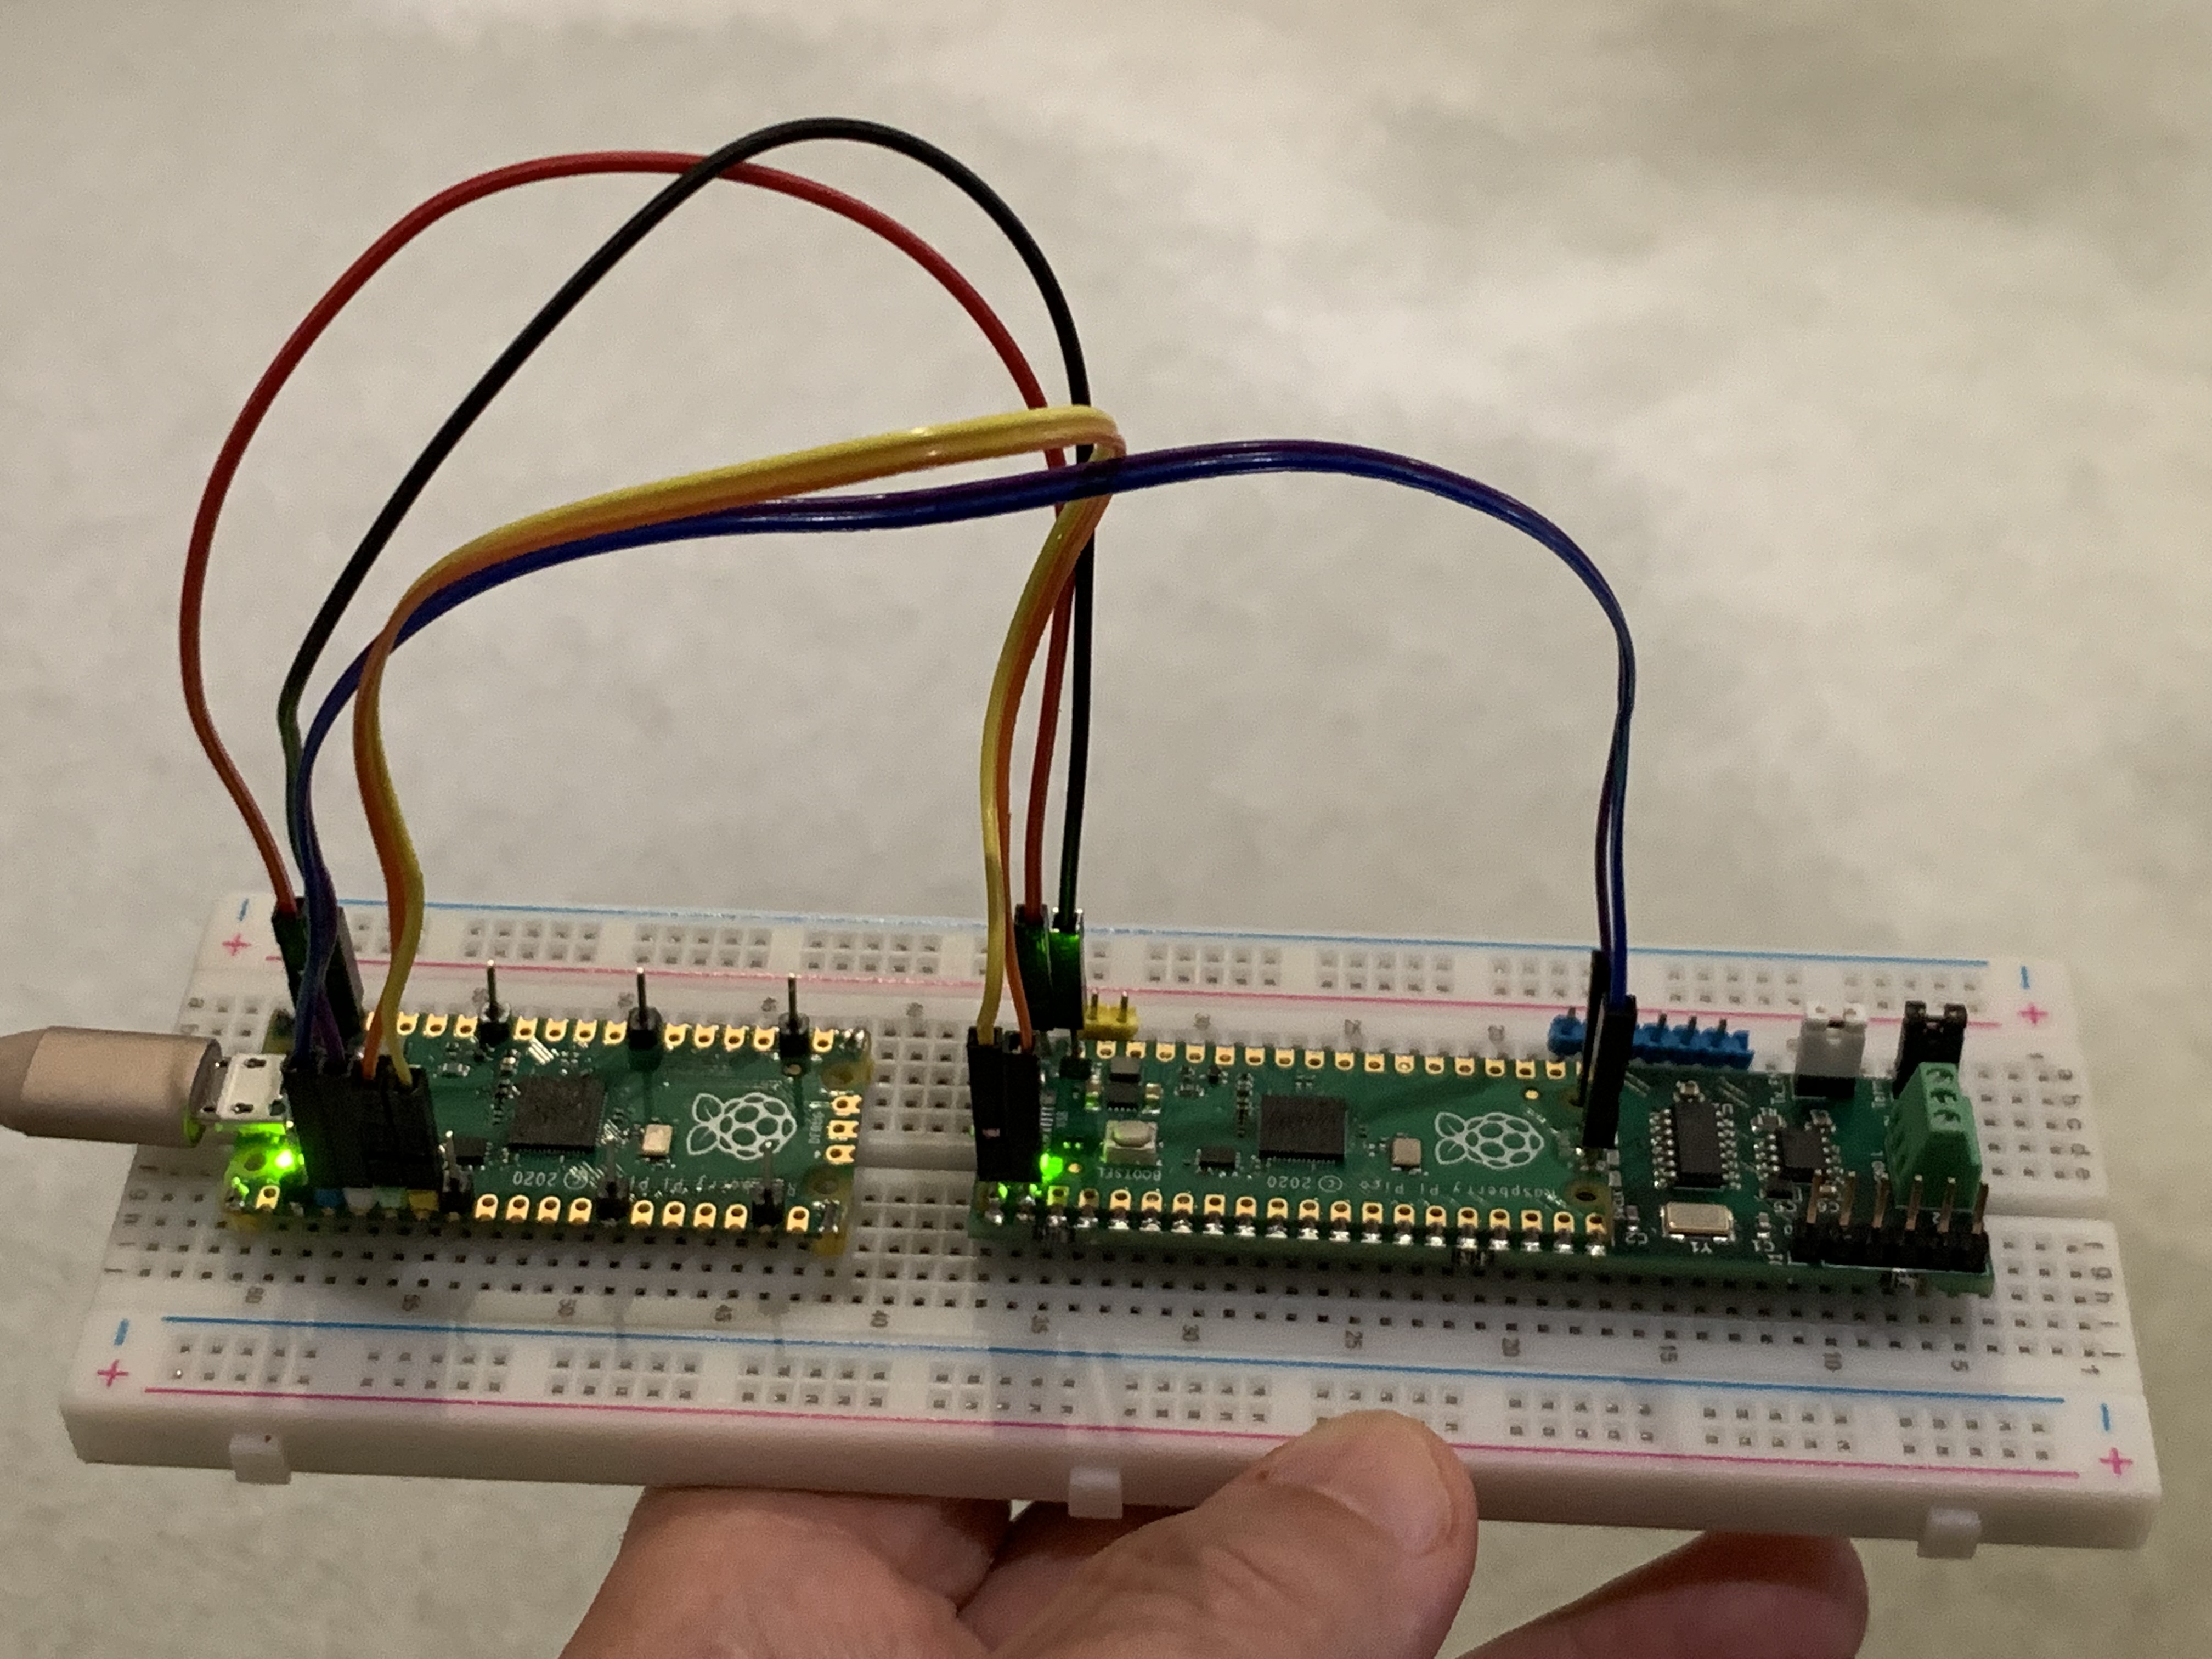 Pico debugger running picoprobe connected to CANPico board